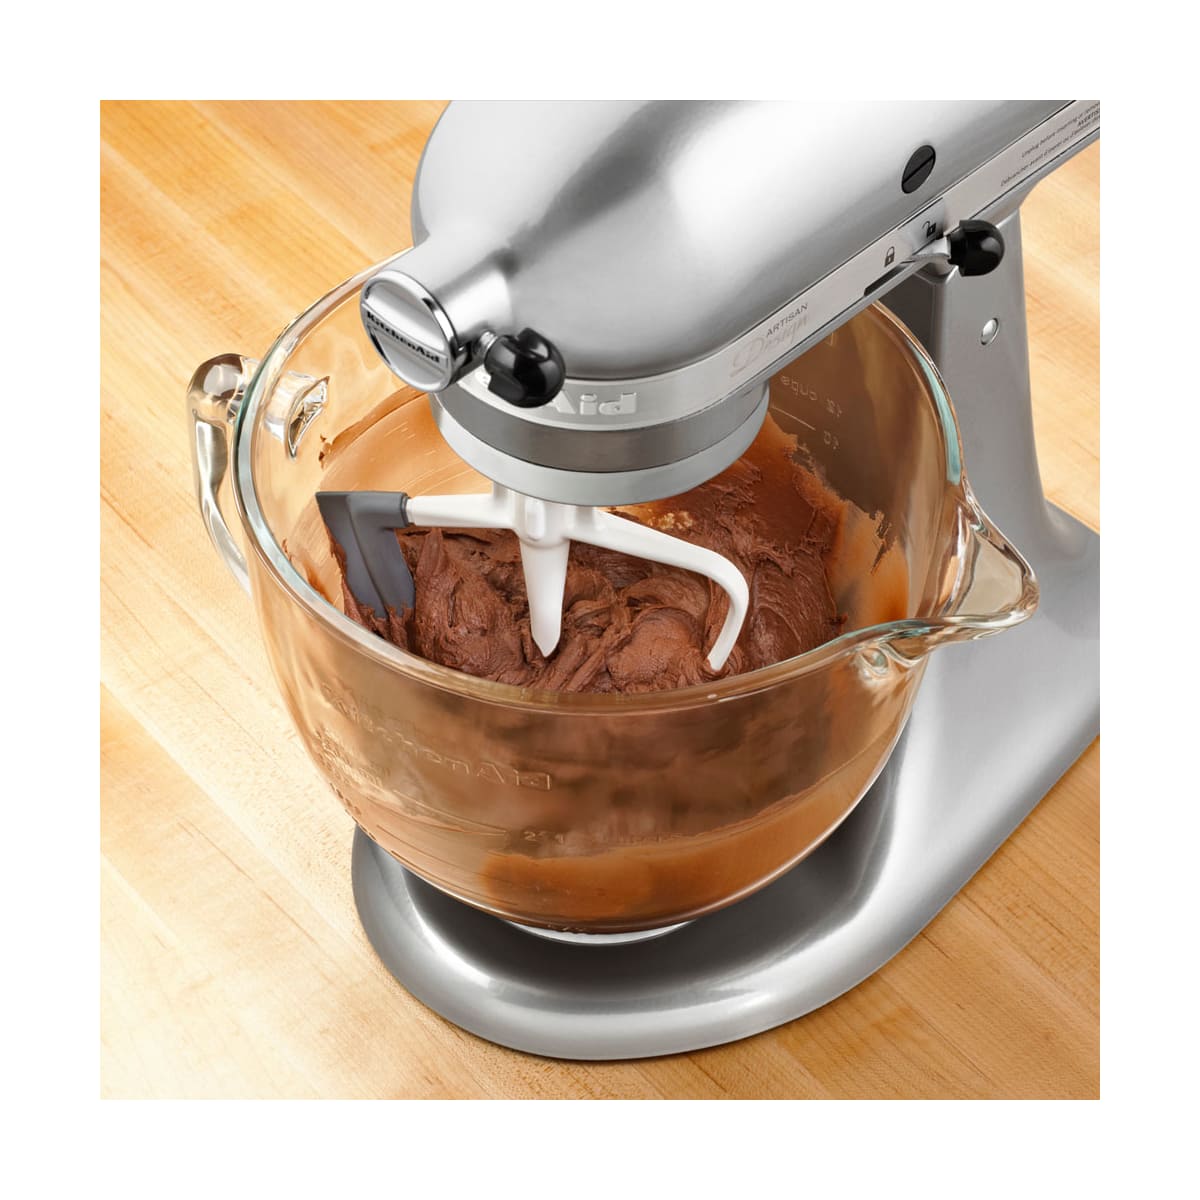 KitchenAid Mixers Food Processing Appliances - K45SS 2 KIT